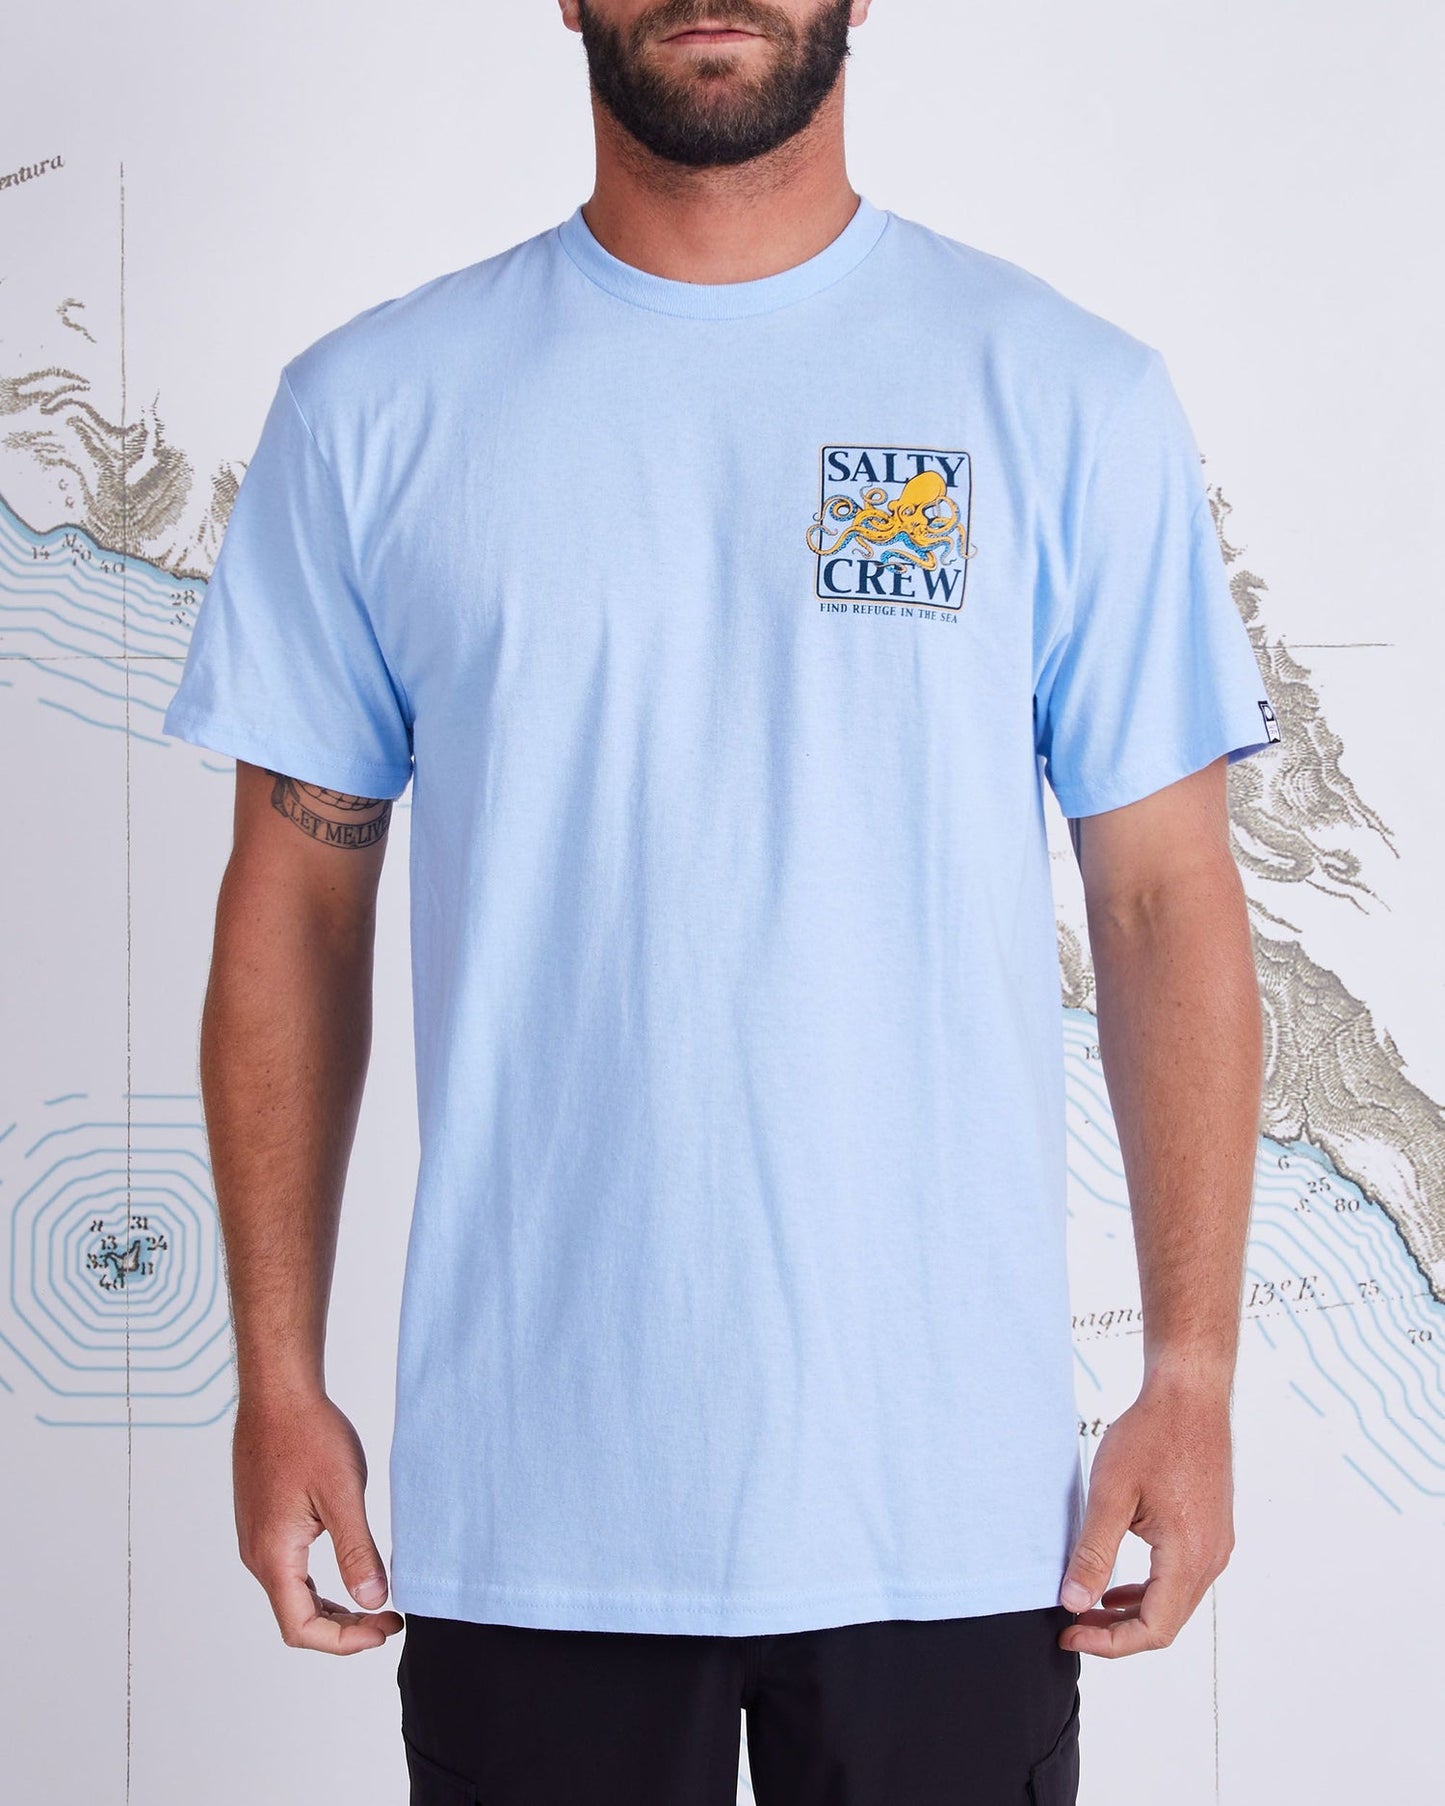 Salty Crew Ink Slinger Standard S/S Tee - Light Blue Mens T Shirt